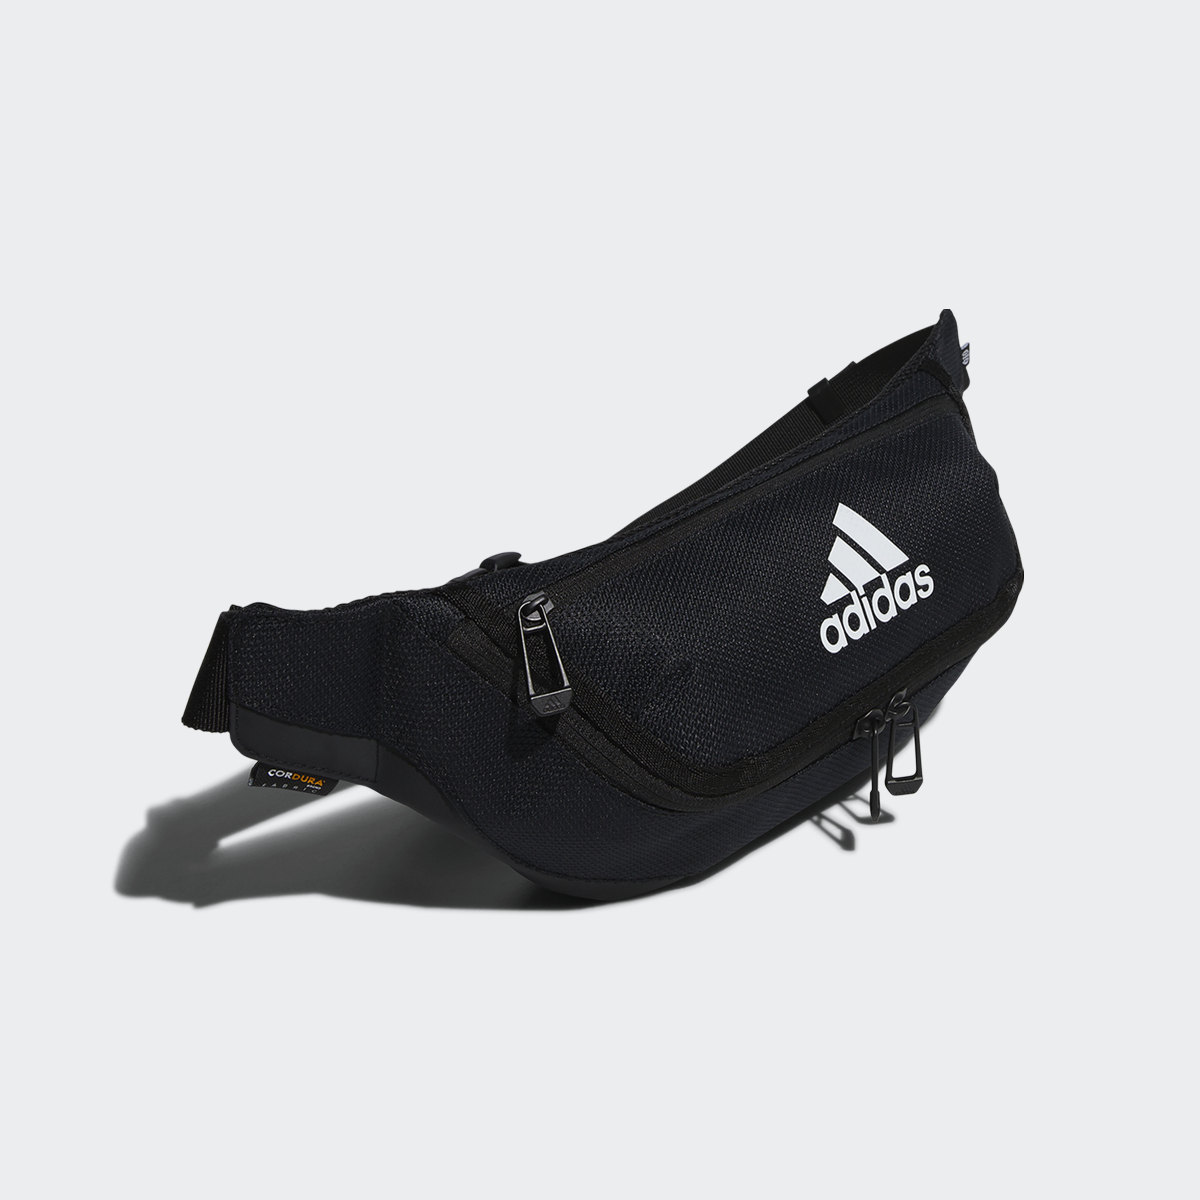 Adidas Endurance Packing System Waist Bag. 4